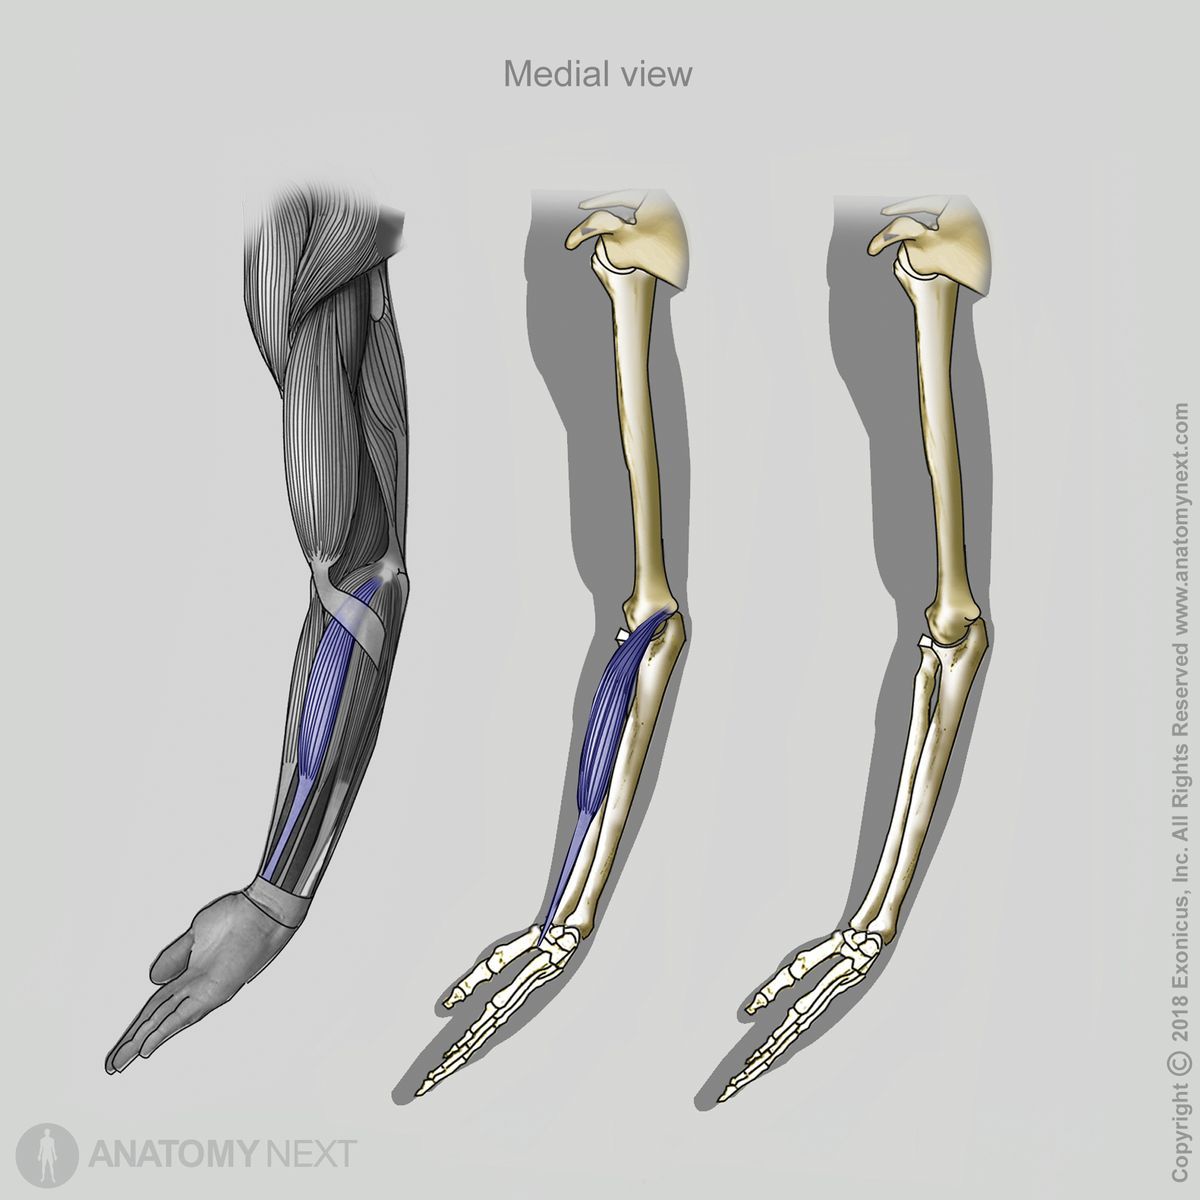 Flexor carpi radialis, Forearm muscles, Muscles of forearm, Muscles of upper limb, Arm muscles, Anterior forearm muscles, Anterior compartment of forearm muscles, Anterior compartment muscles